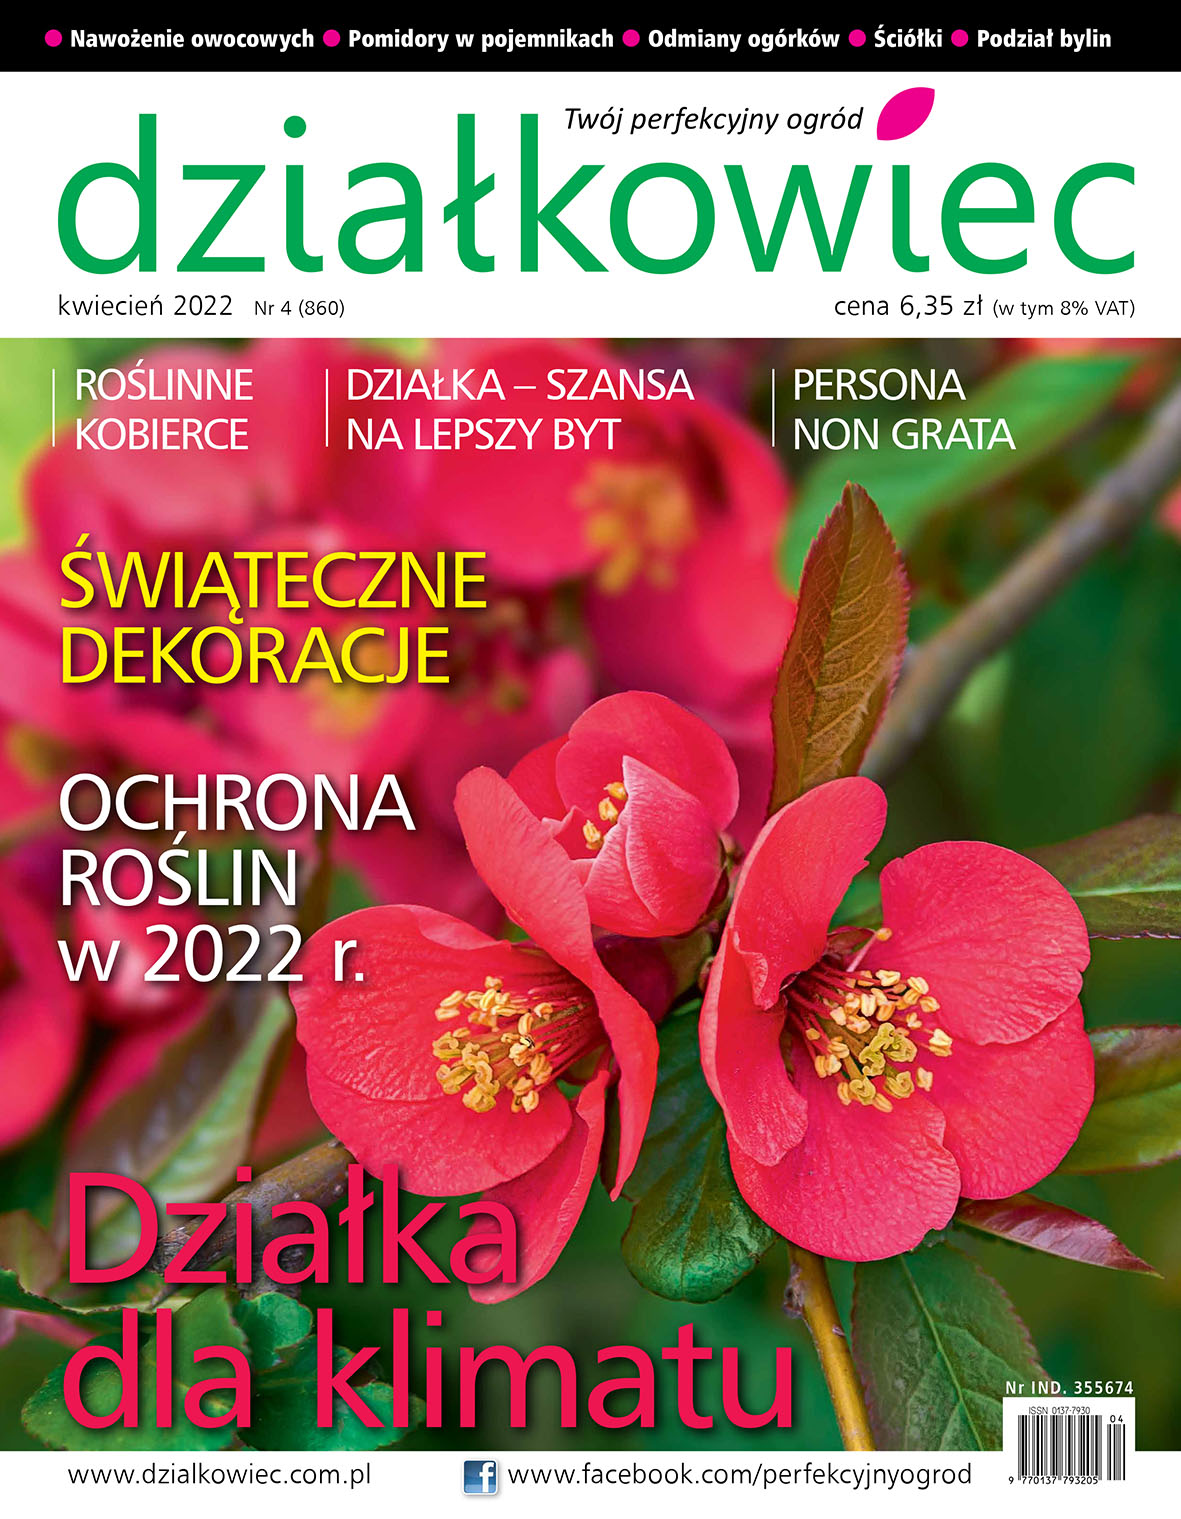 dzialkowiec.com.pl